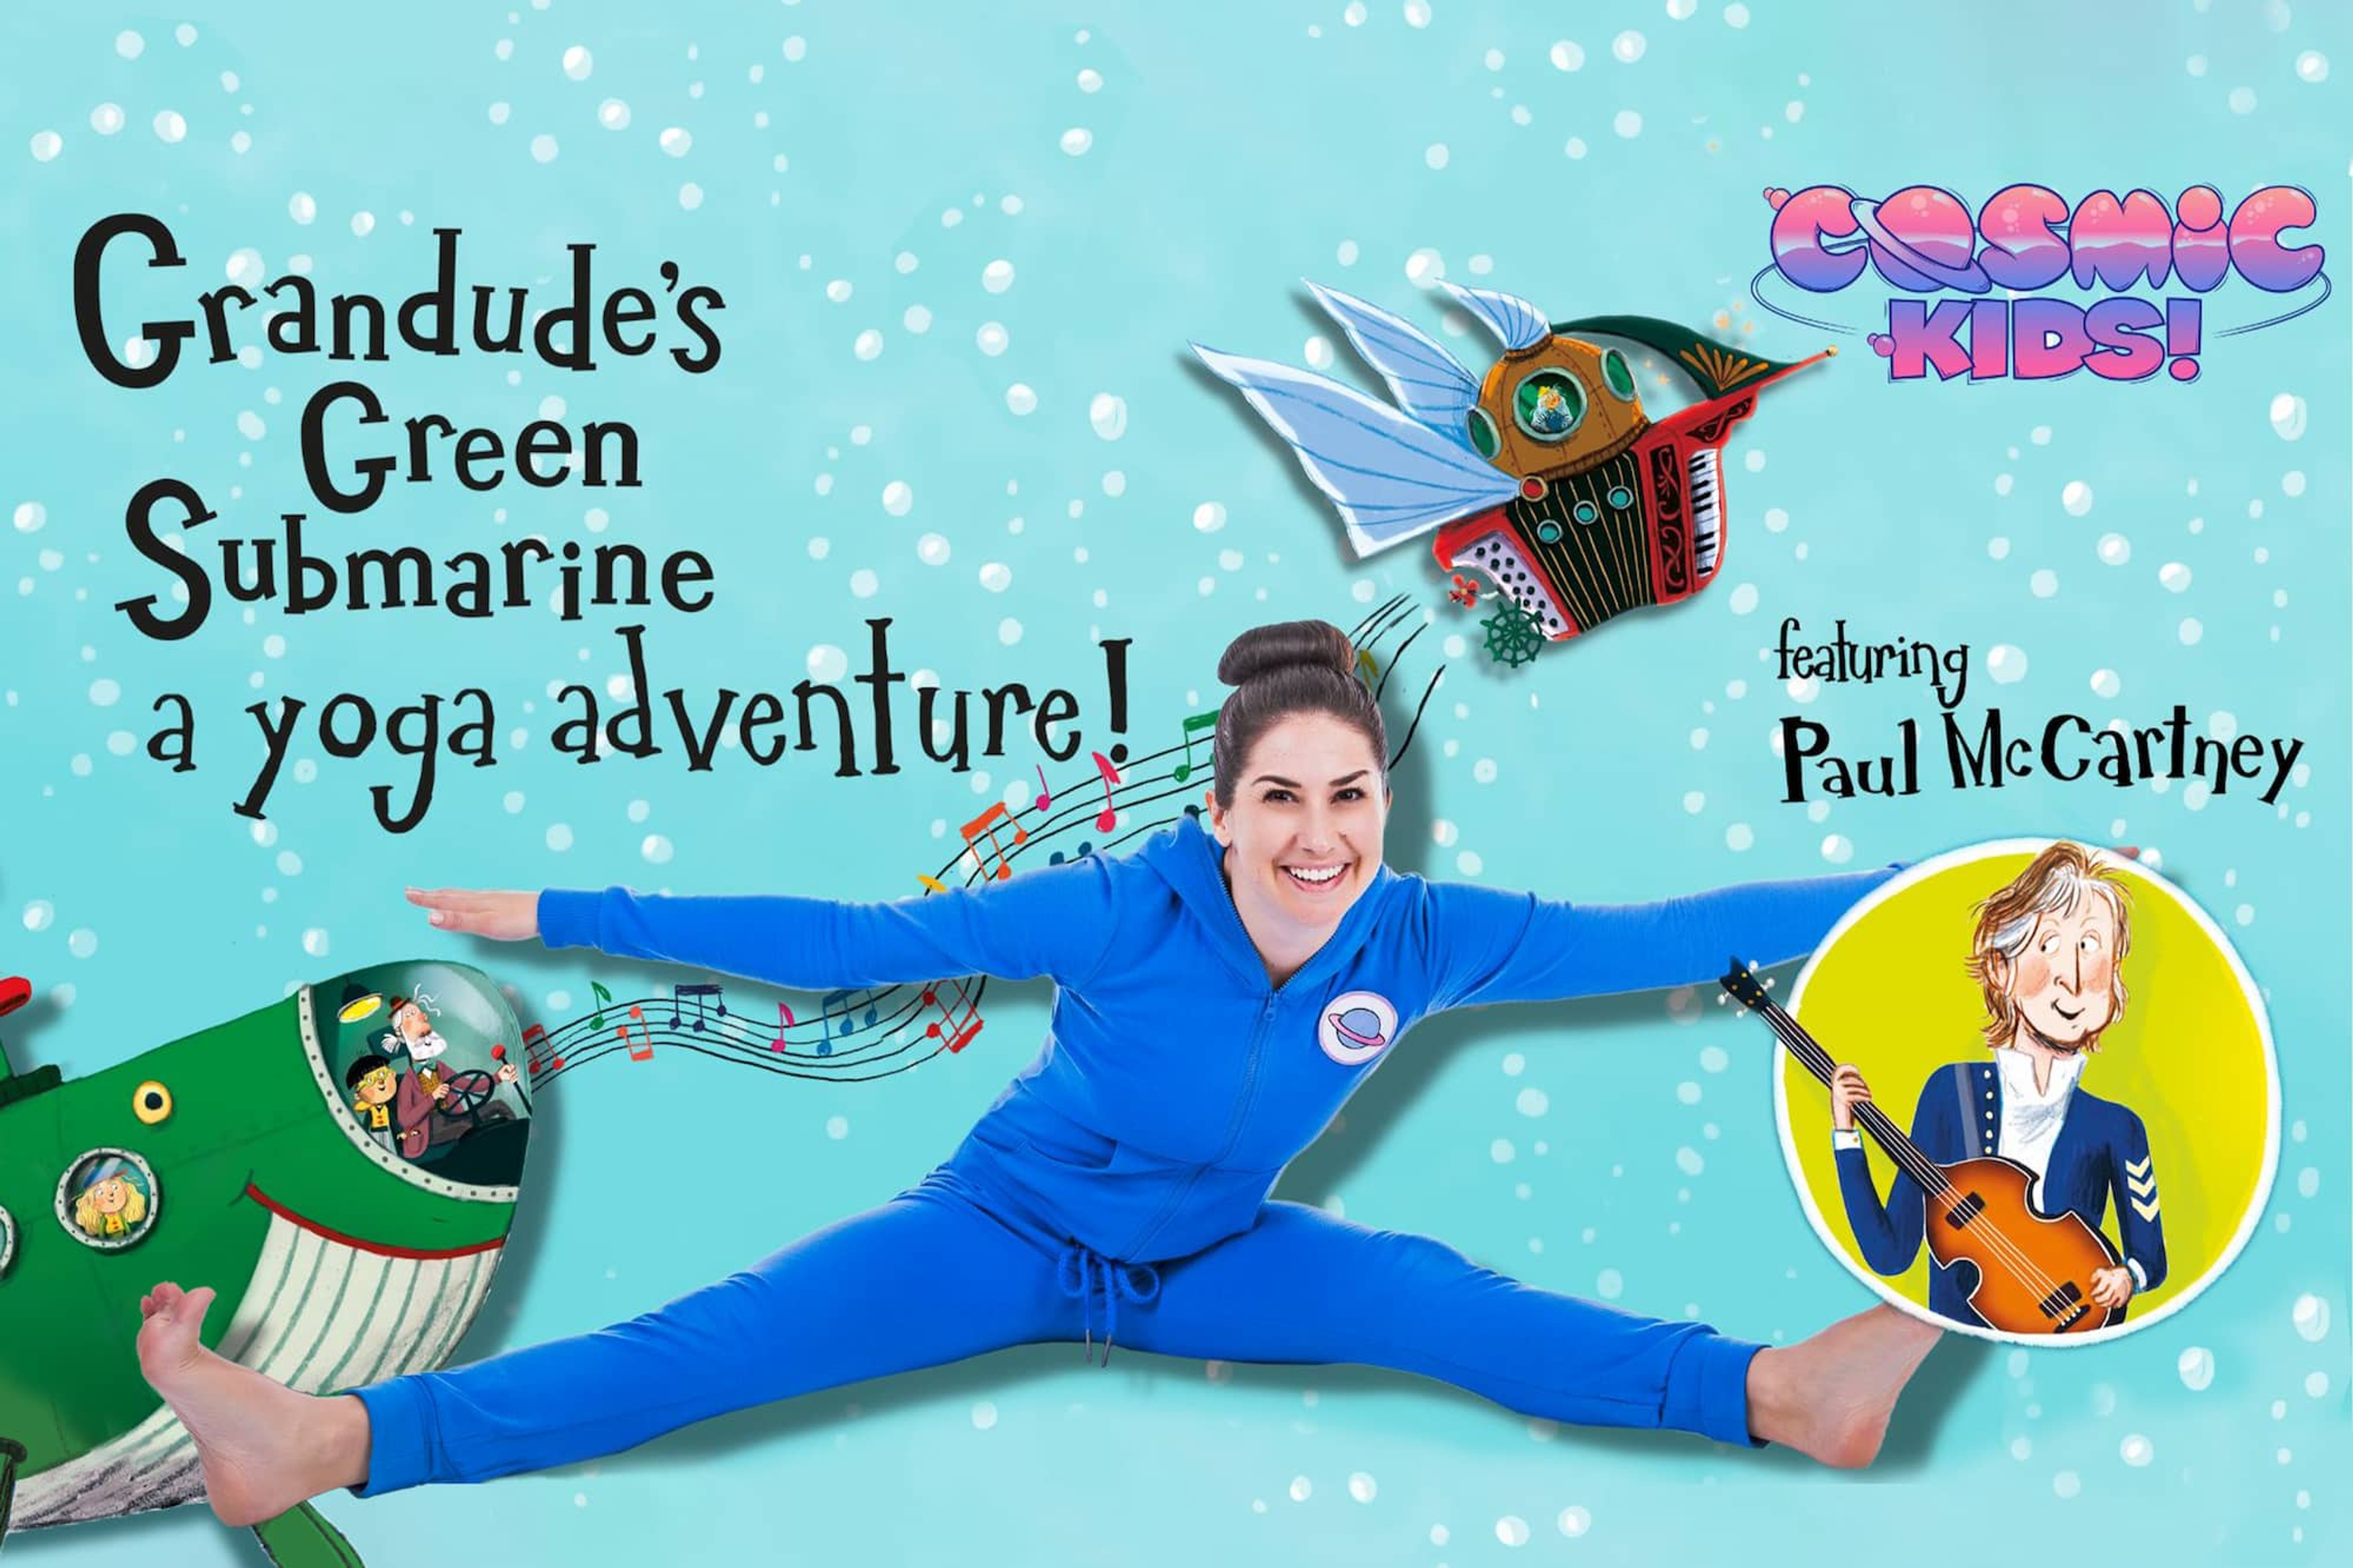 Graphic promoting 'Grandude's Green Submarine' a yoga adventure 